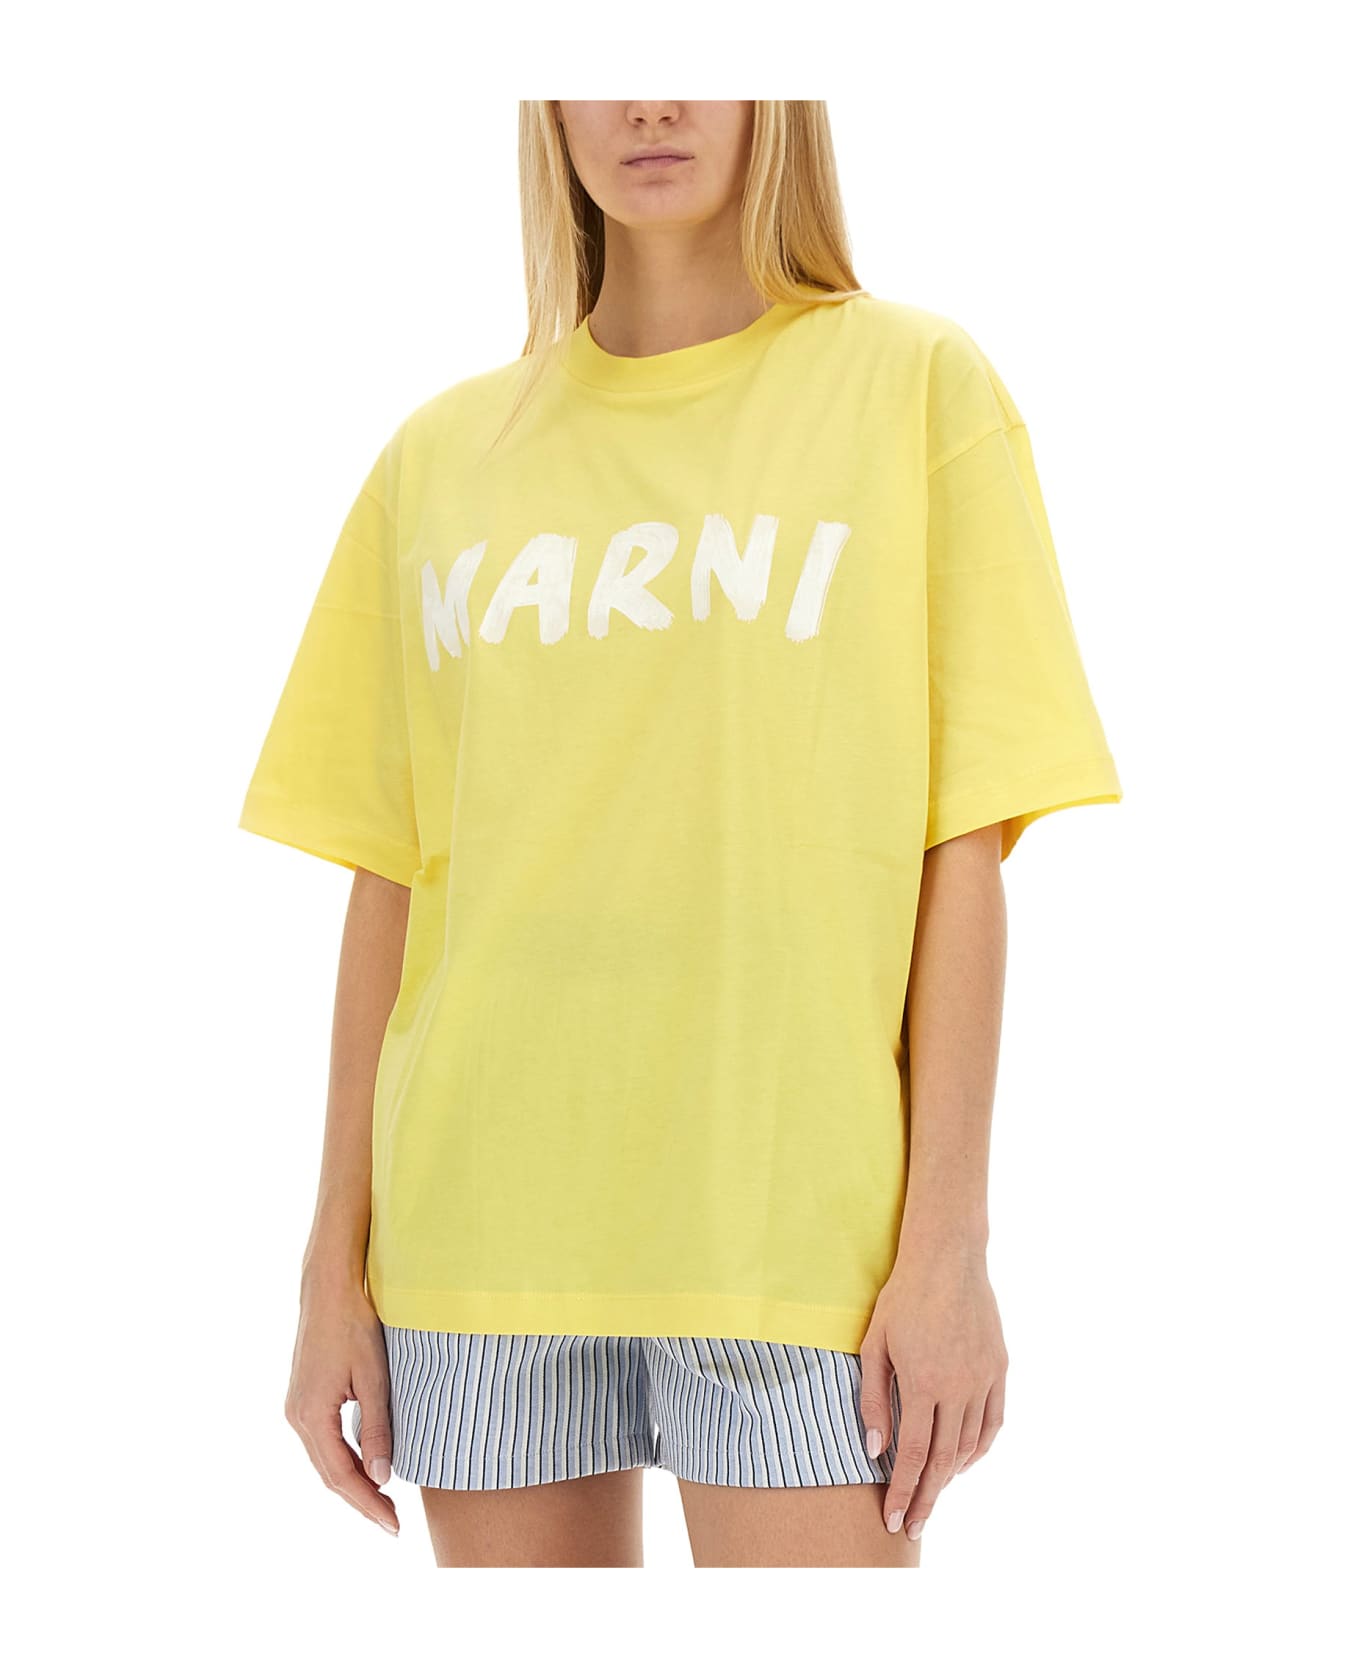 Marni T-shirt With Logo - GIALLO